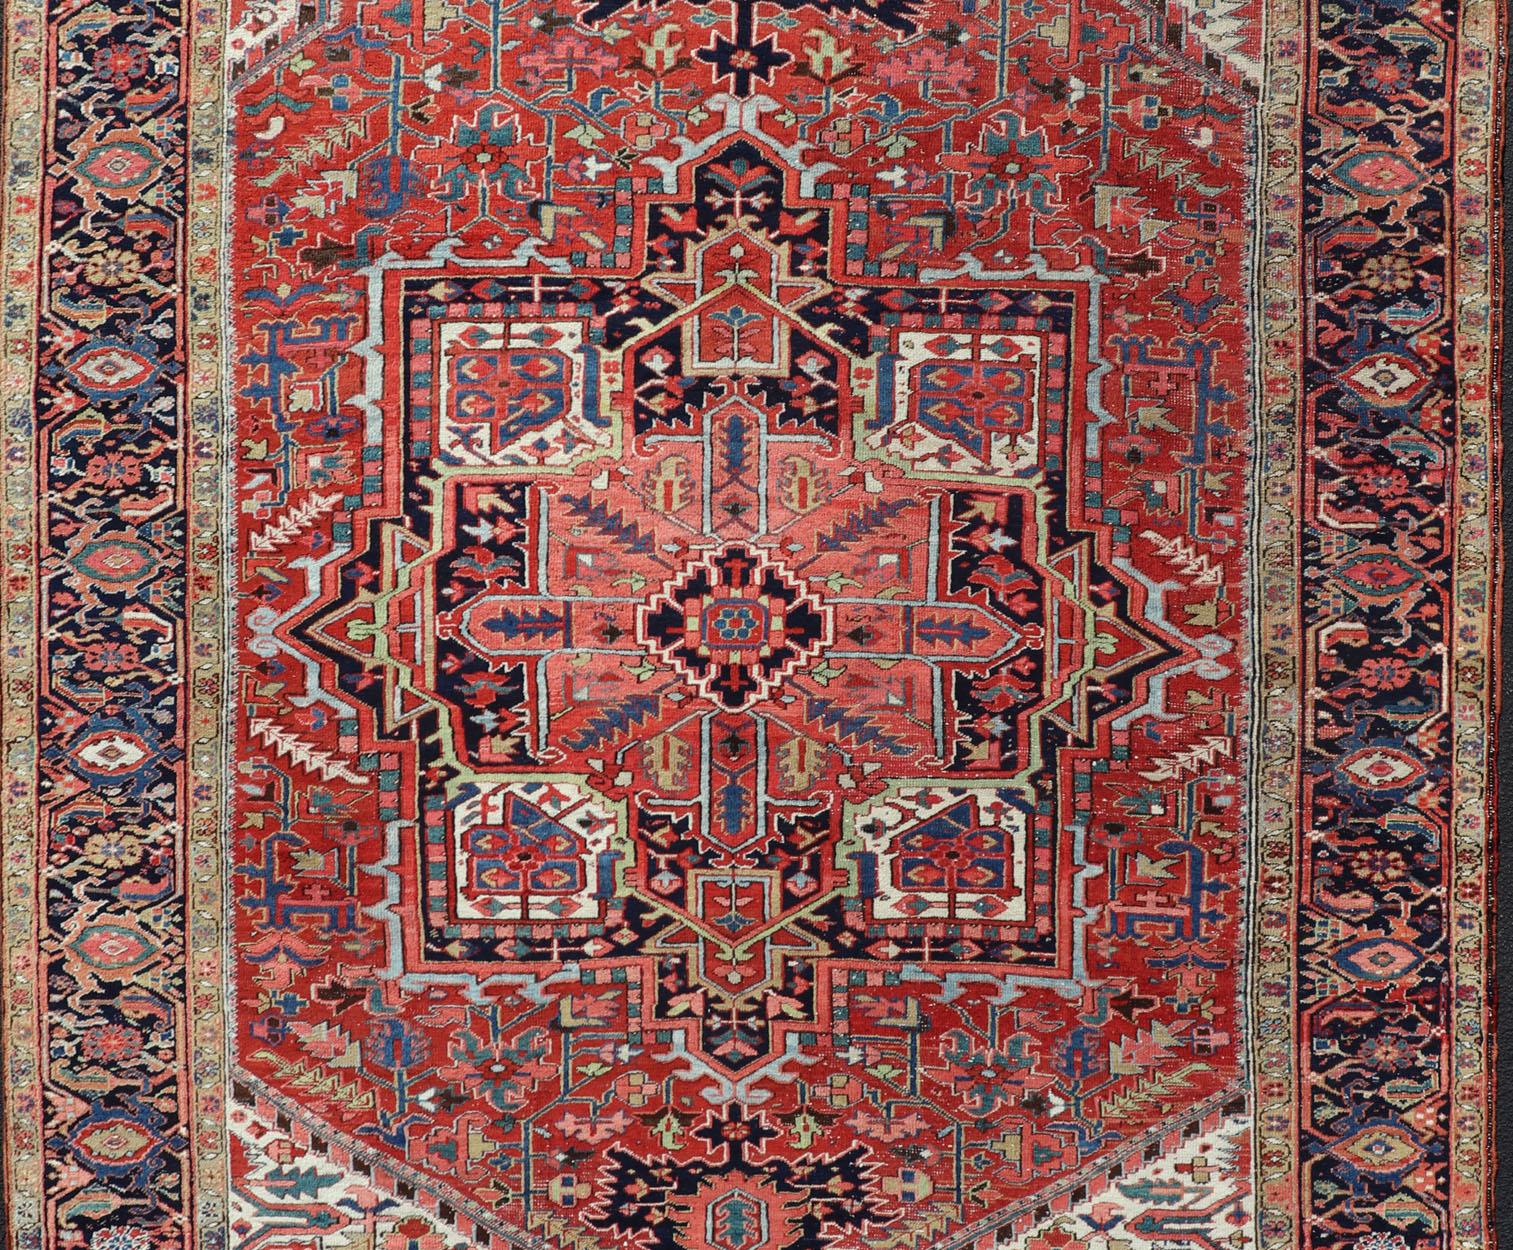 Antique Persian Heriz. Keivan Woven Arts / rug/ EMB-9636-P13586, country of origin / type: Iran, Persian / Heriz, circa Early-20th century

Measures: 8'6'' x 12'0''

This lovely antique Heriz rug, hailing from northwestern Iran (circa 1930s),